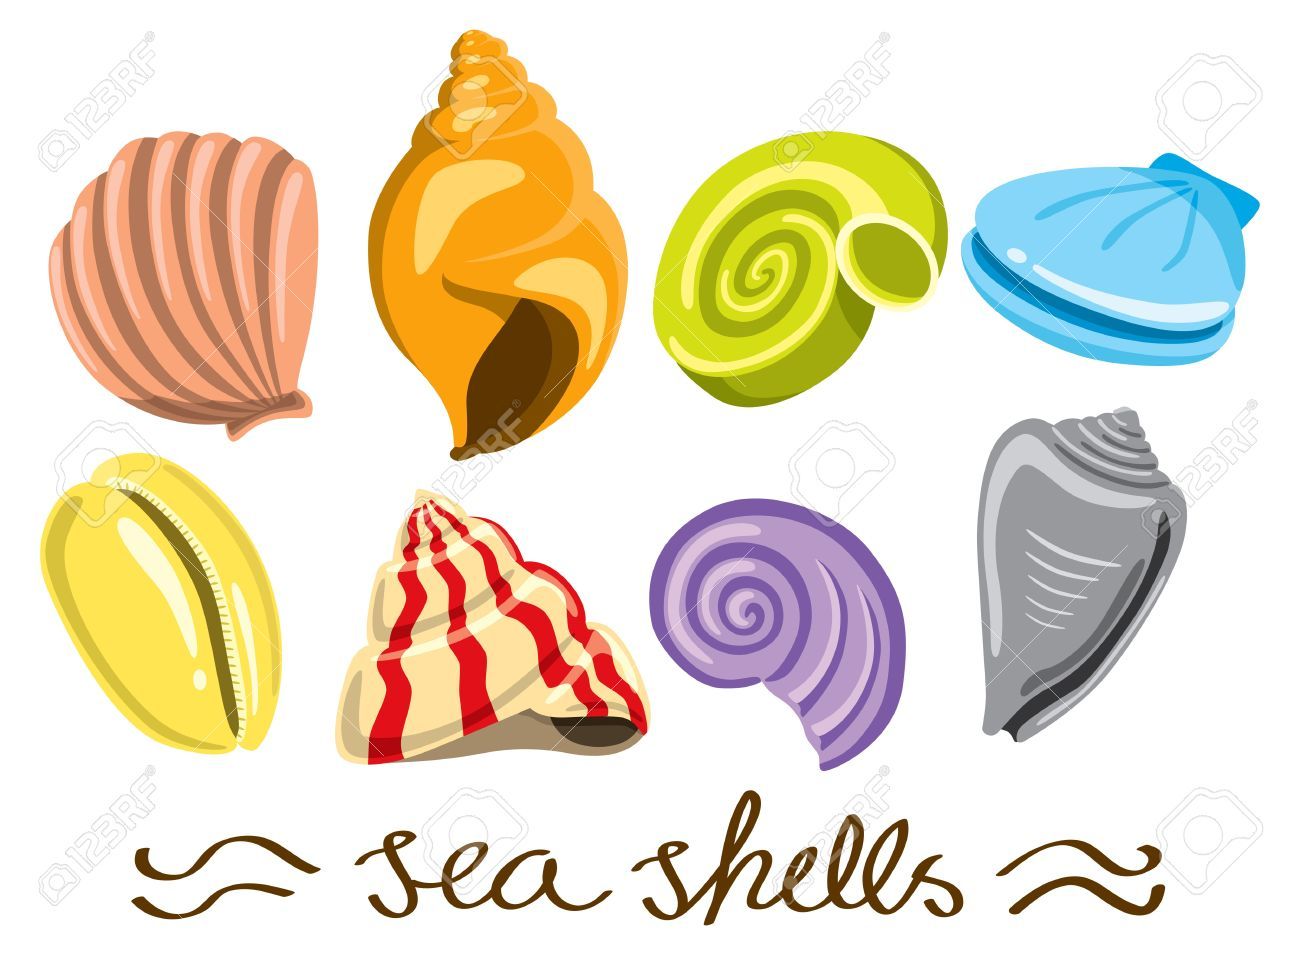 seashells clipart cartoon